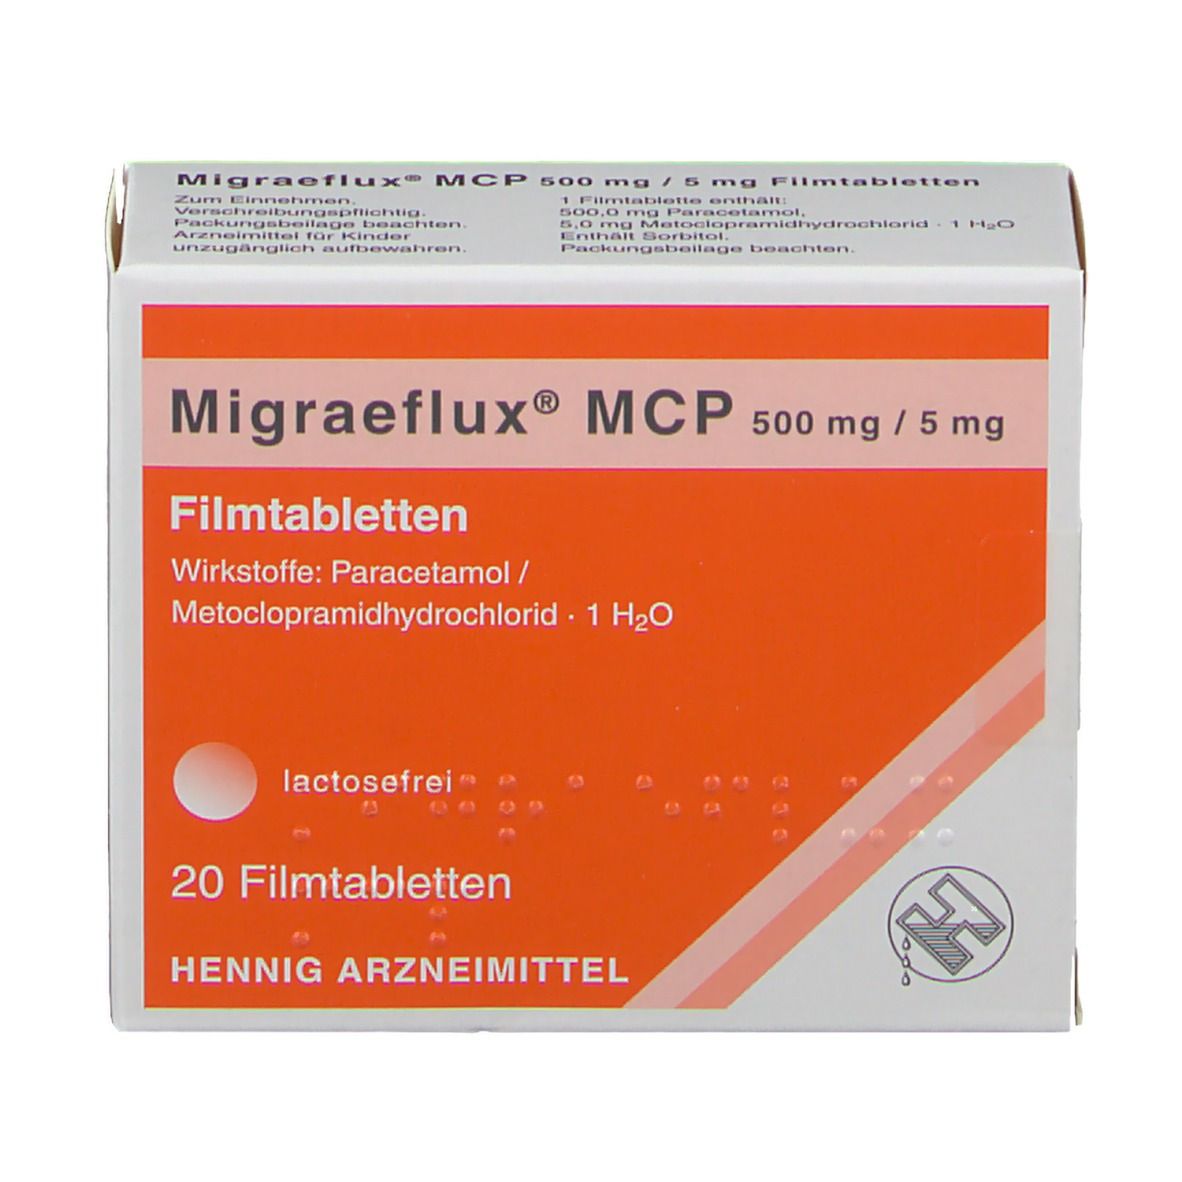 Migraeflux® MCP 500 mg/5 mg